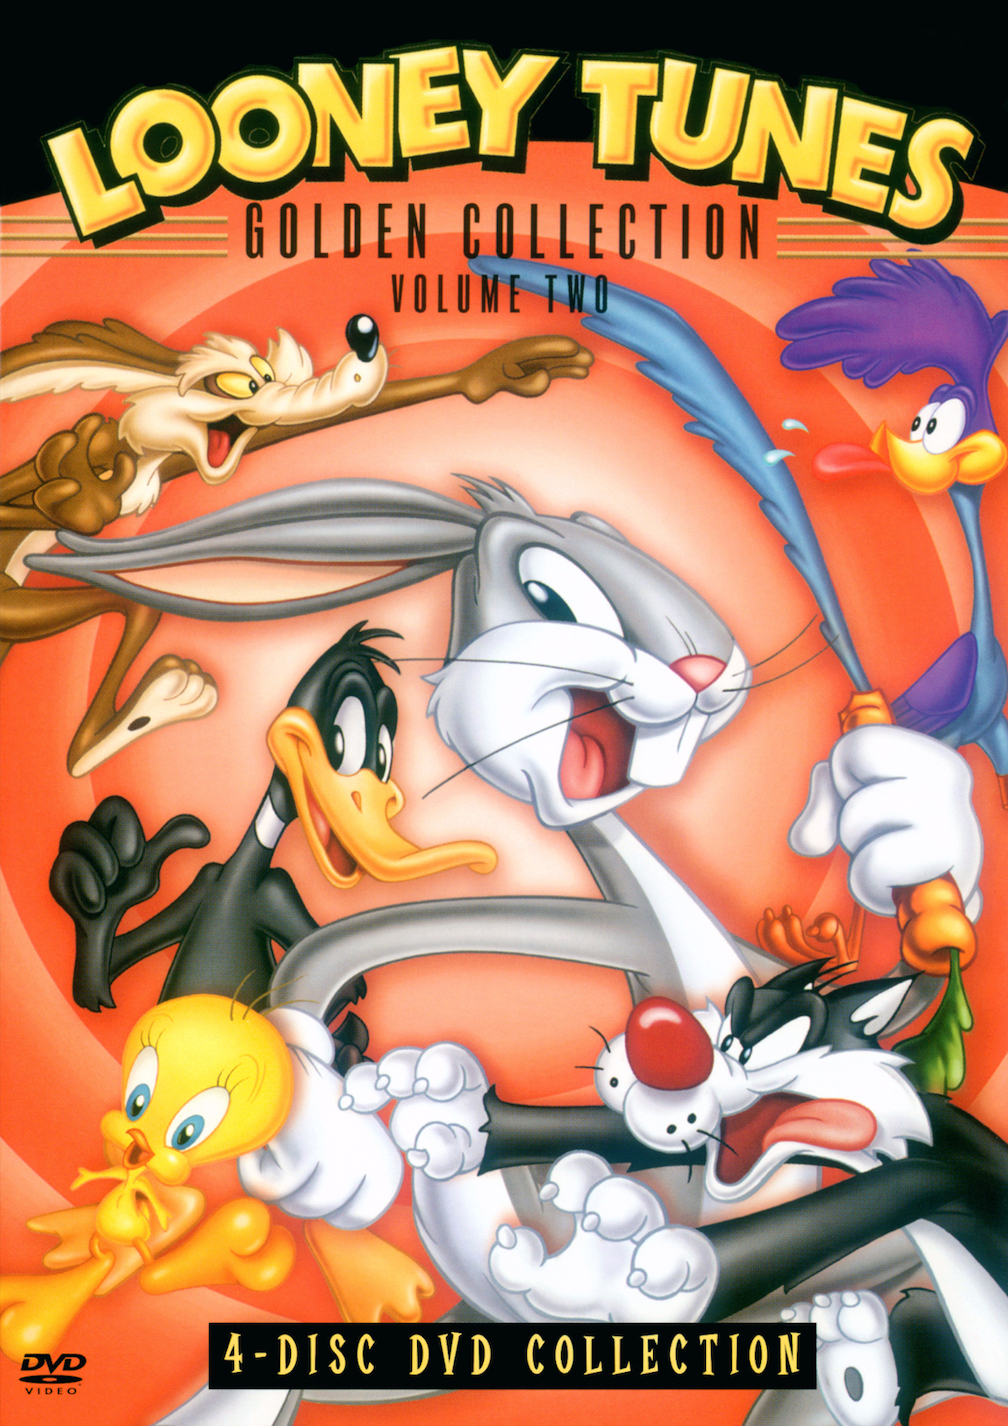 Gimnasio tornillo motivo Looney Tunes Golden Collection Volume 2 | Looney Tunes Wiki | Fandom